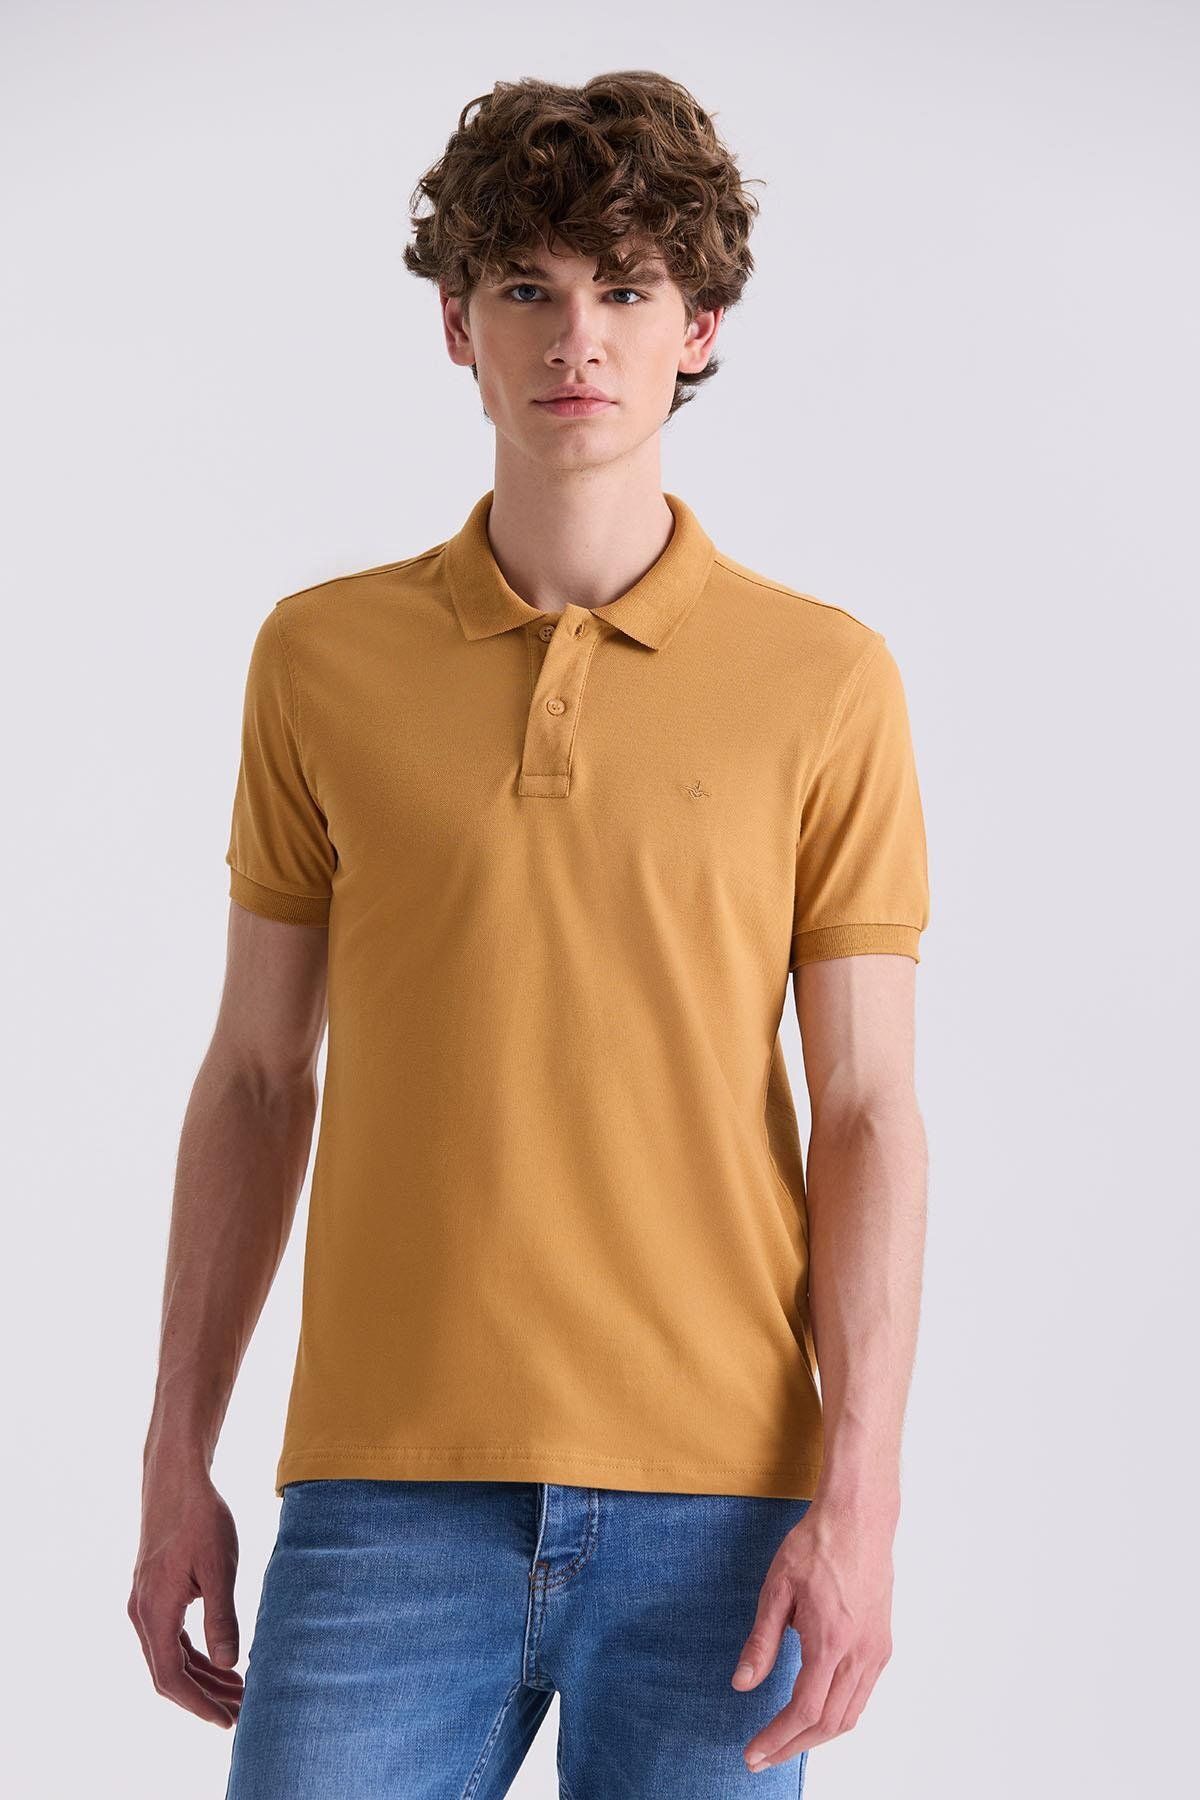 Jakamen Hardal Slim Fit Polo Yaka T-Shirt